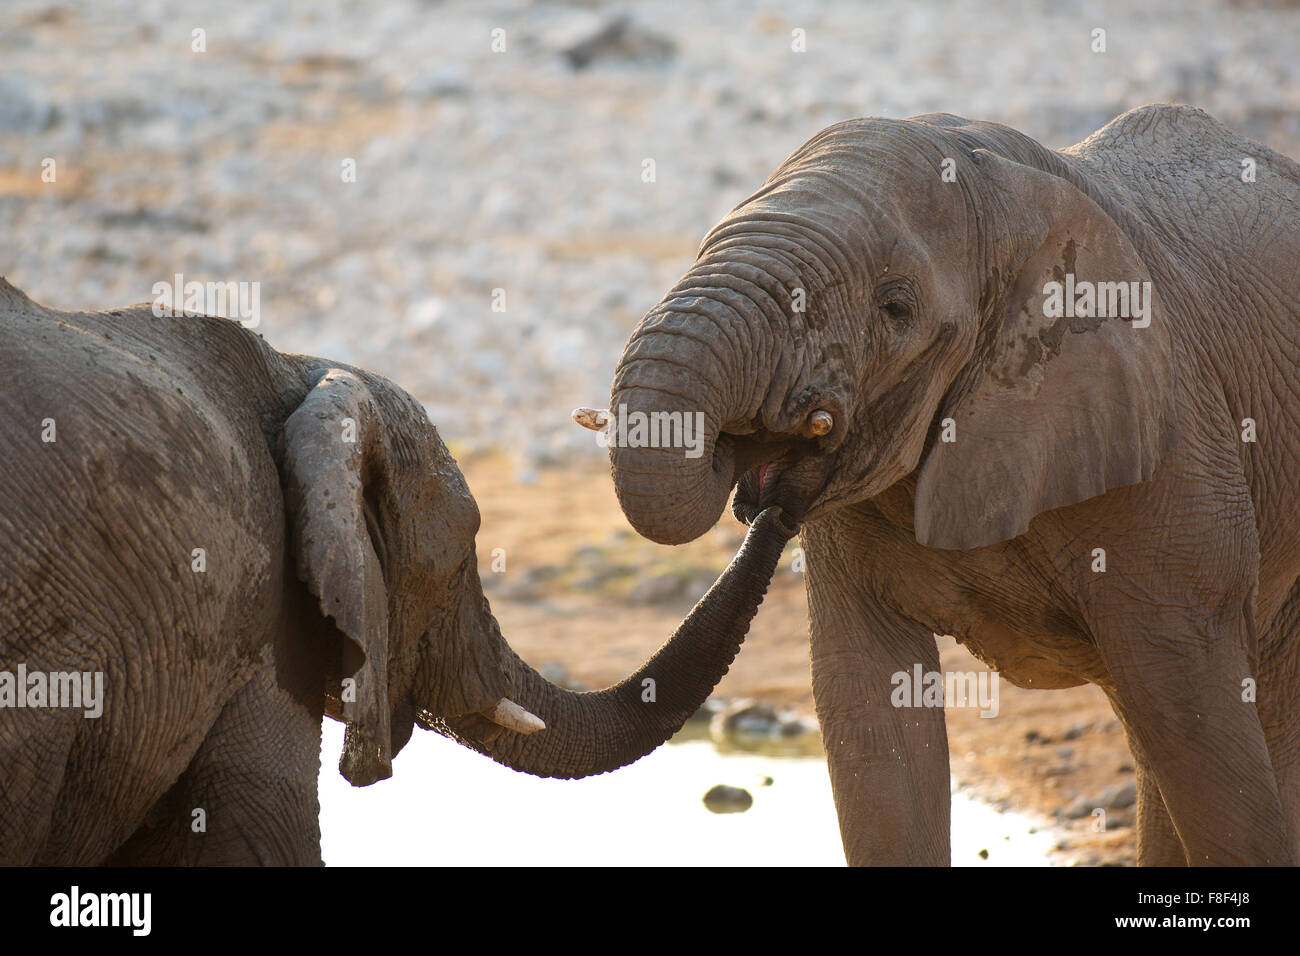 Two elephants greeting each other at the Okaukuejo waterhole, Etosha National Park, Namibia. Stock Photo